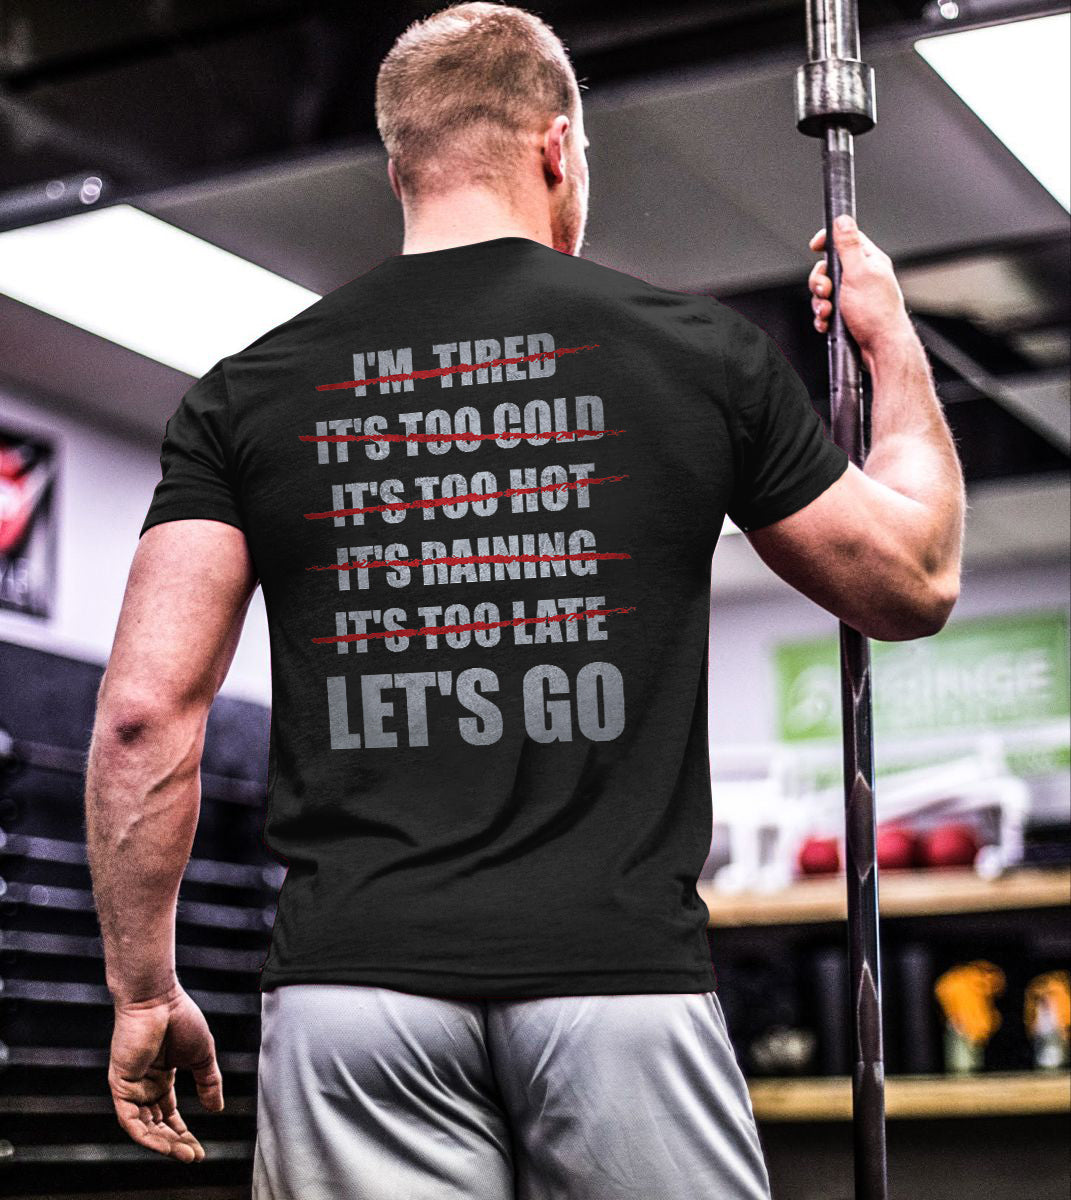 GrootWear No Excuse Let's Go Printed Men's T-shirt